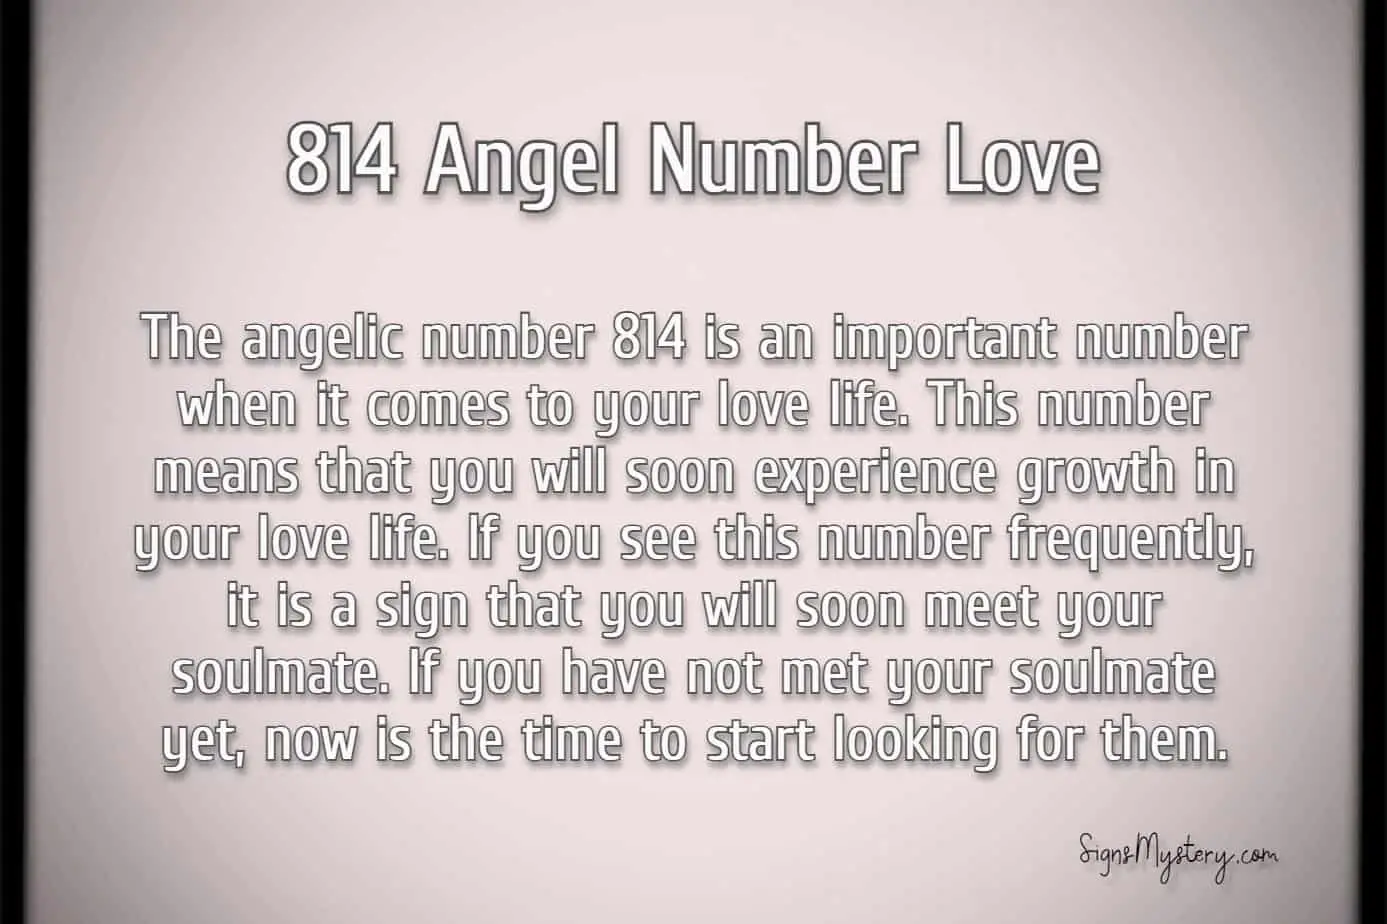 814 angel number love